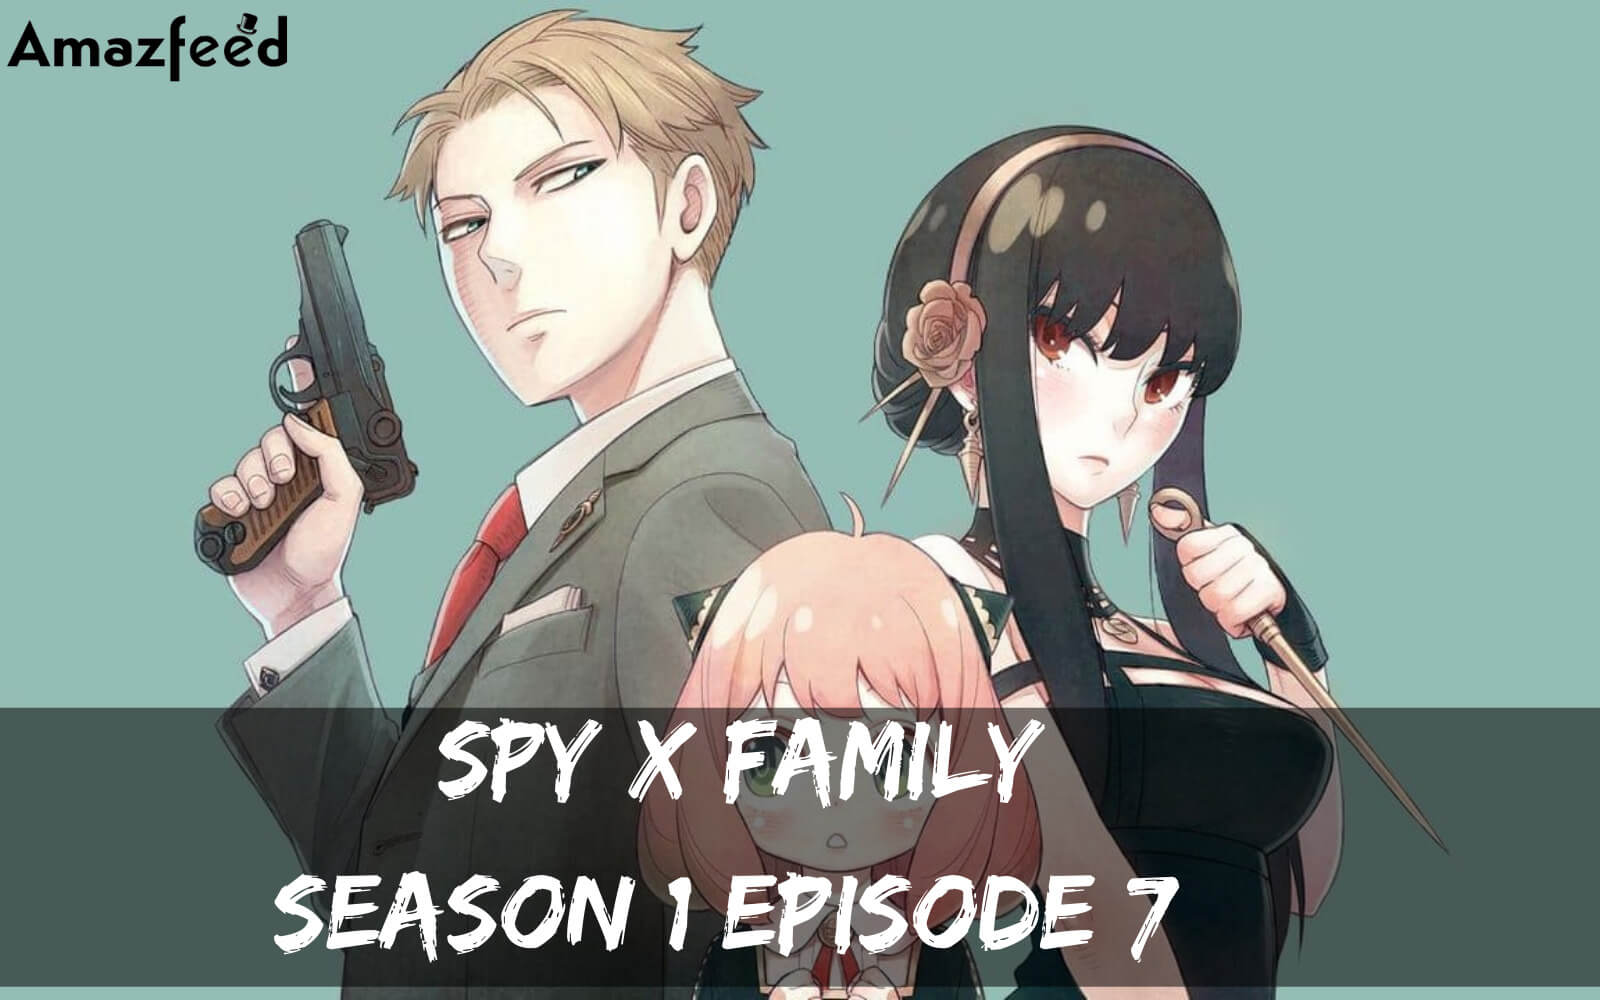 Spy x Family Season 1 Episode 7 Release Date